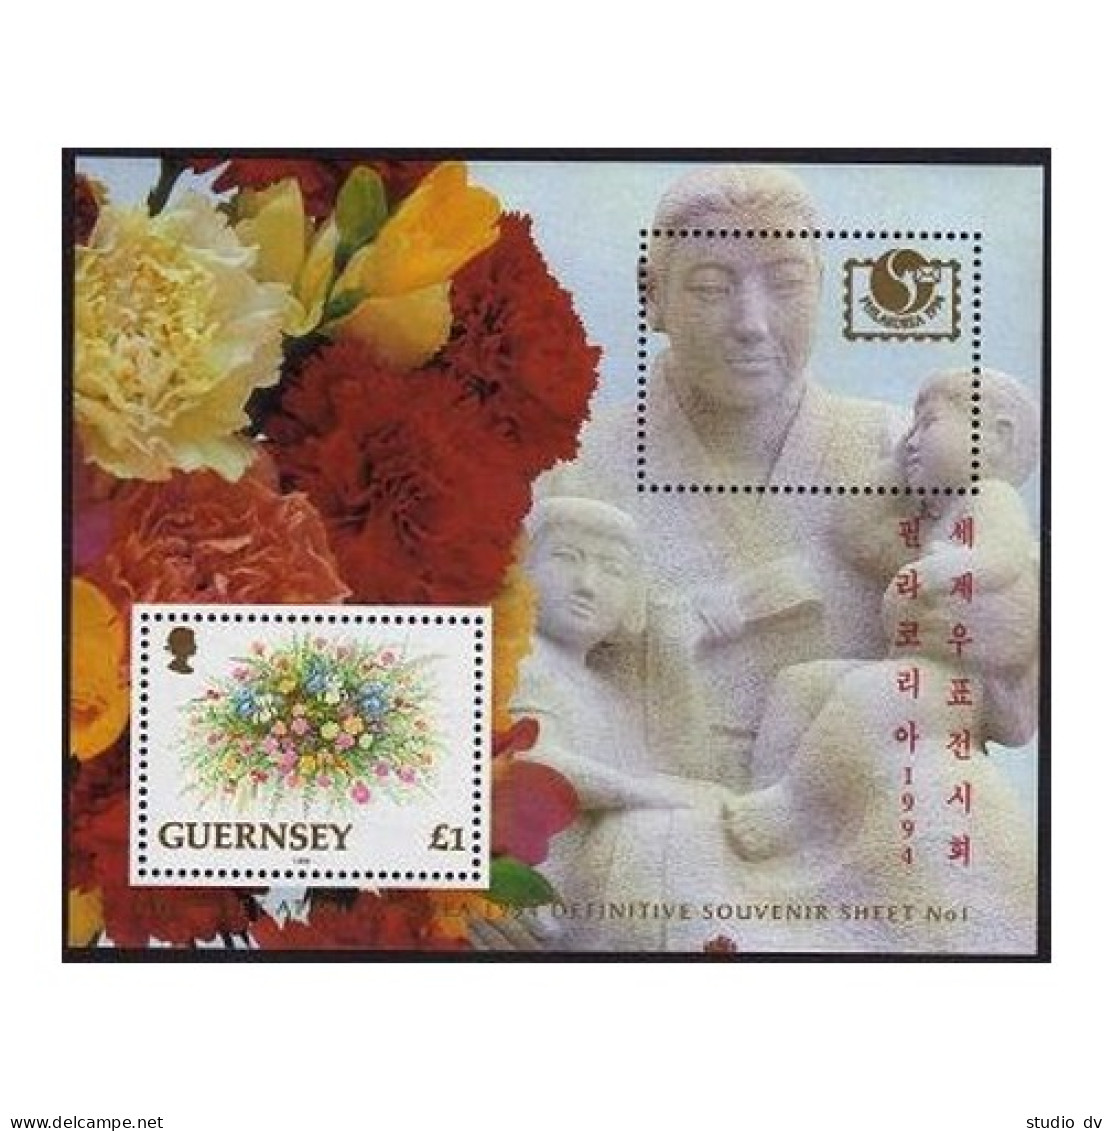 Guernsey 495a,495b, MNH. Michel Bl.12,15. PHILAKOREA, SINGAPORE-1995. Flowers. - Guernesey